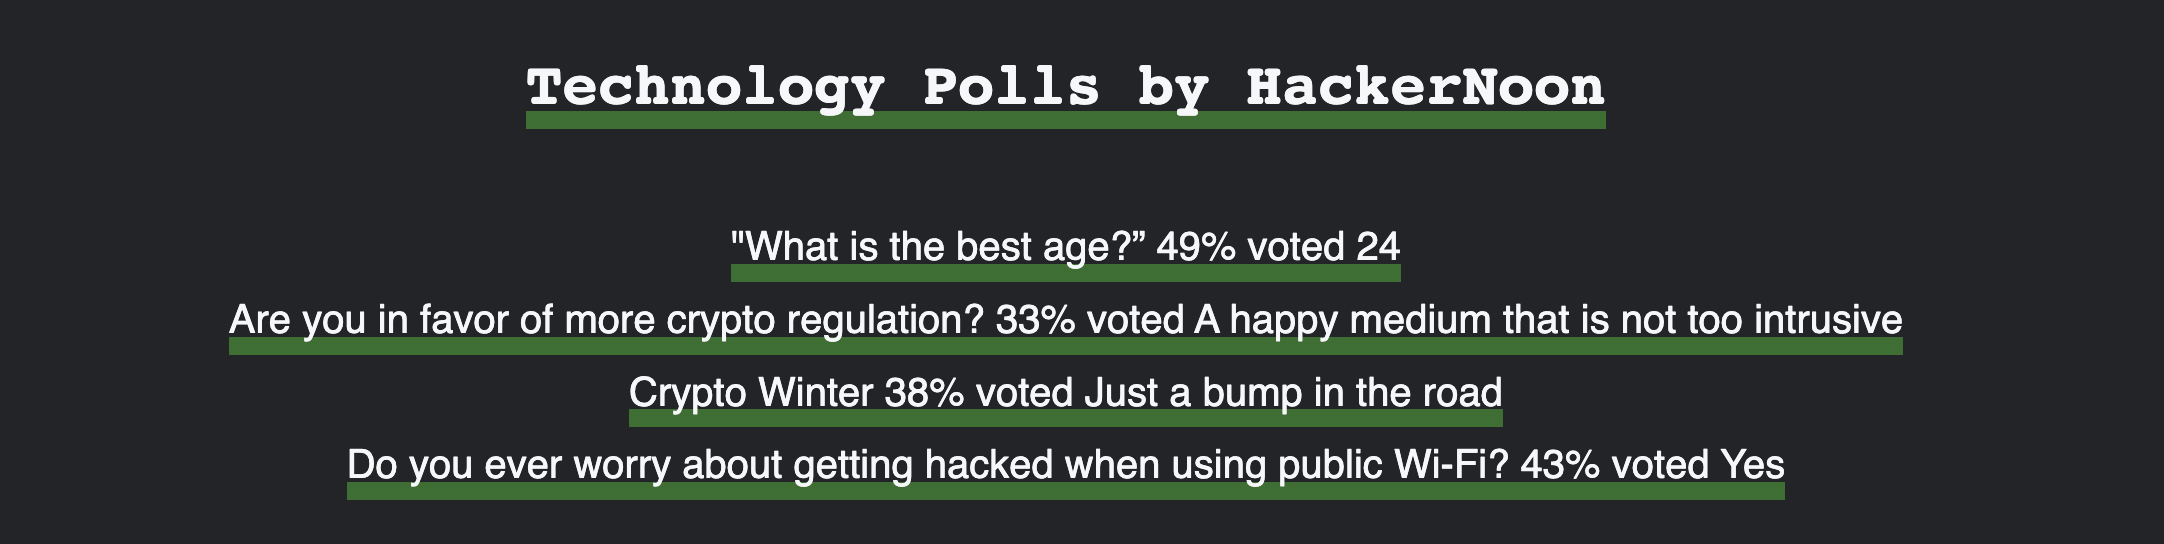 HackerNoon Polls Results